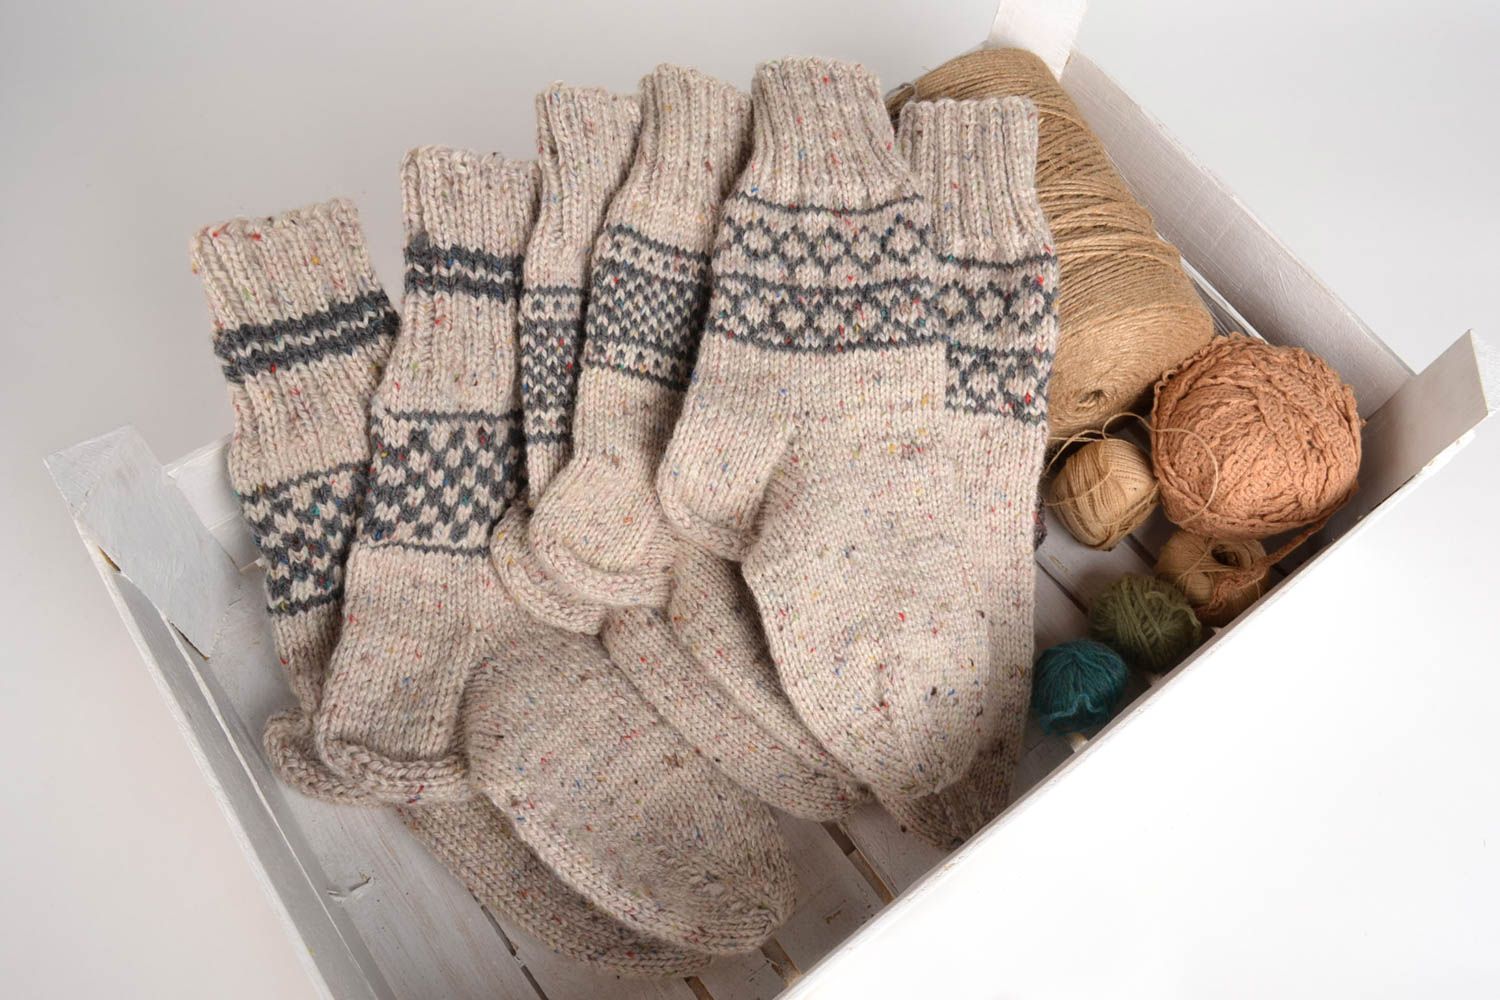 Handmade knitted socks warmest socks woolen socks winter clothes gifts for guys photo 1